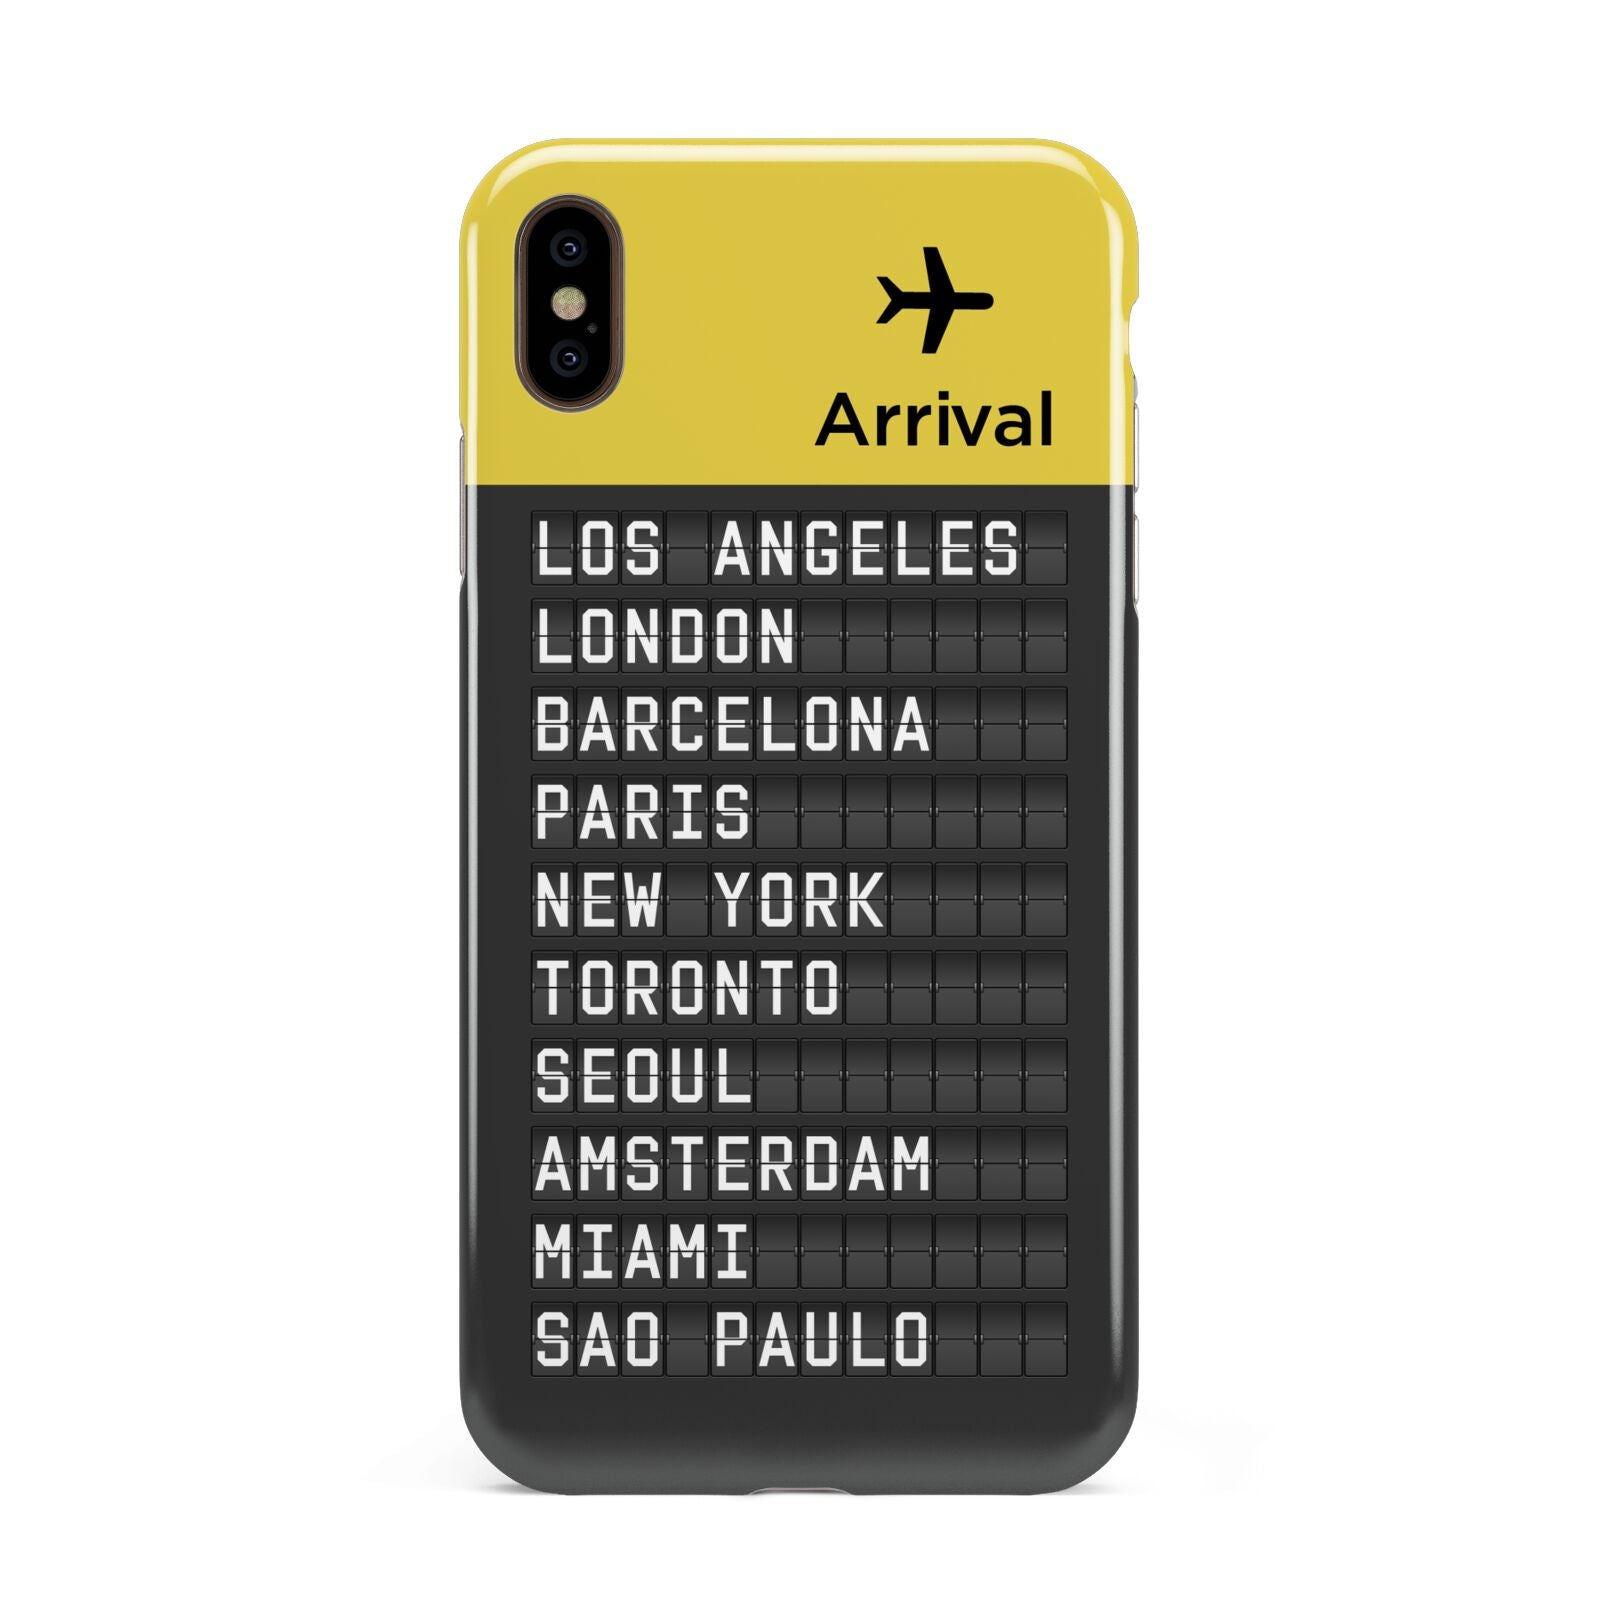 Airport Arrivals Board Apple iPhone Xs Max 3D Tough Case